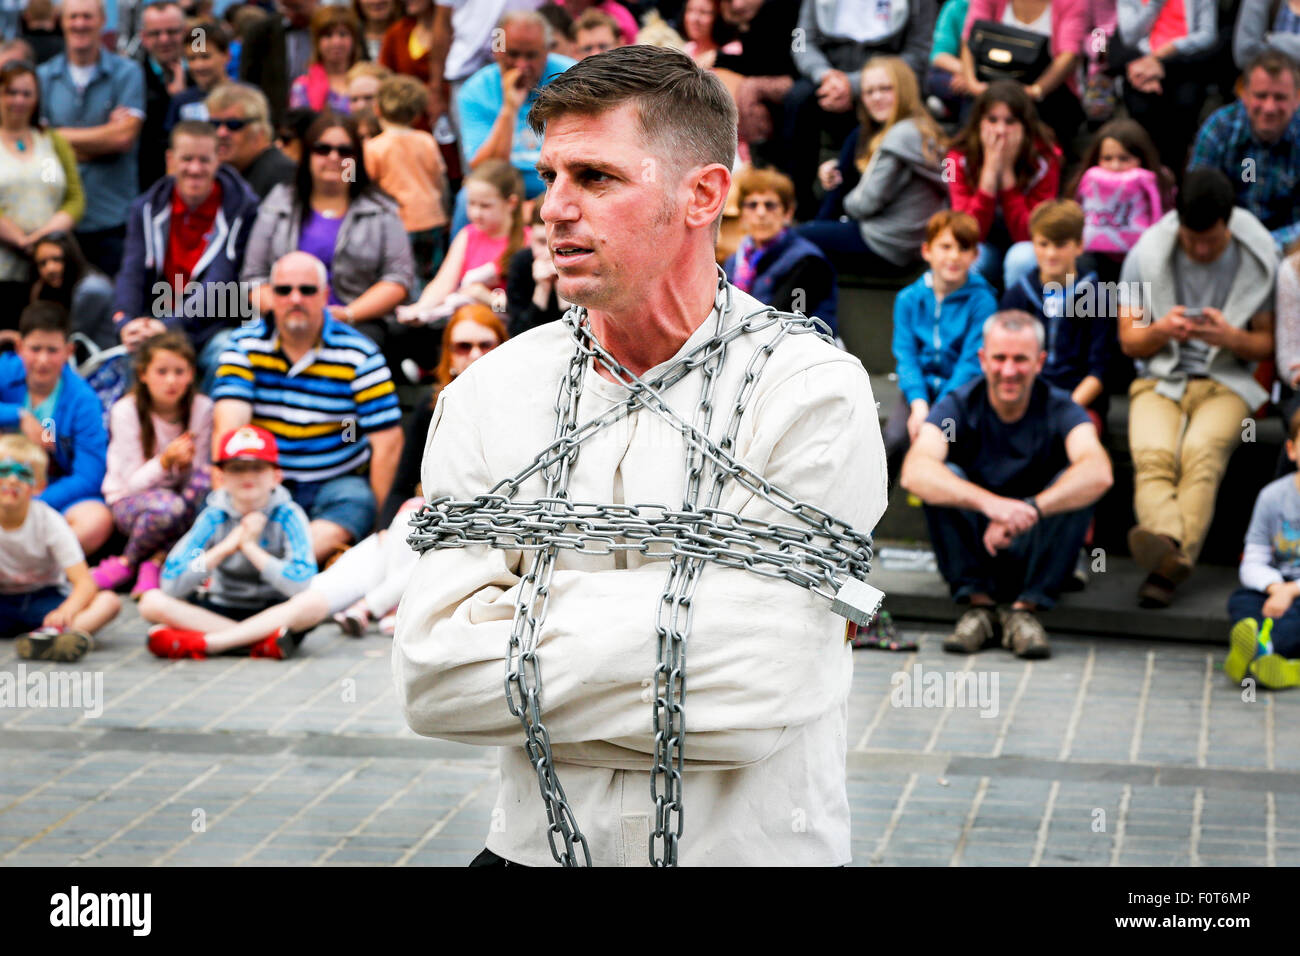 Street entertainer doing an act as an escapologist, The Mound, Edinburgh Fringe Festival, Scotland, UK Stock Photo